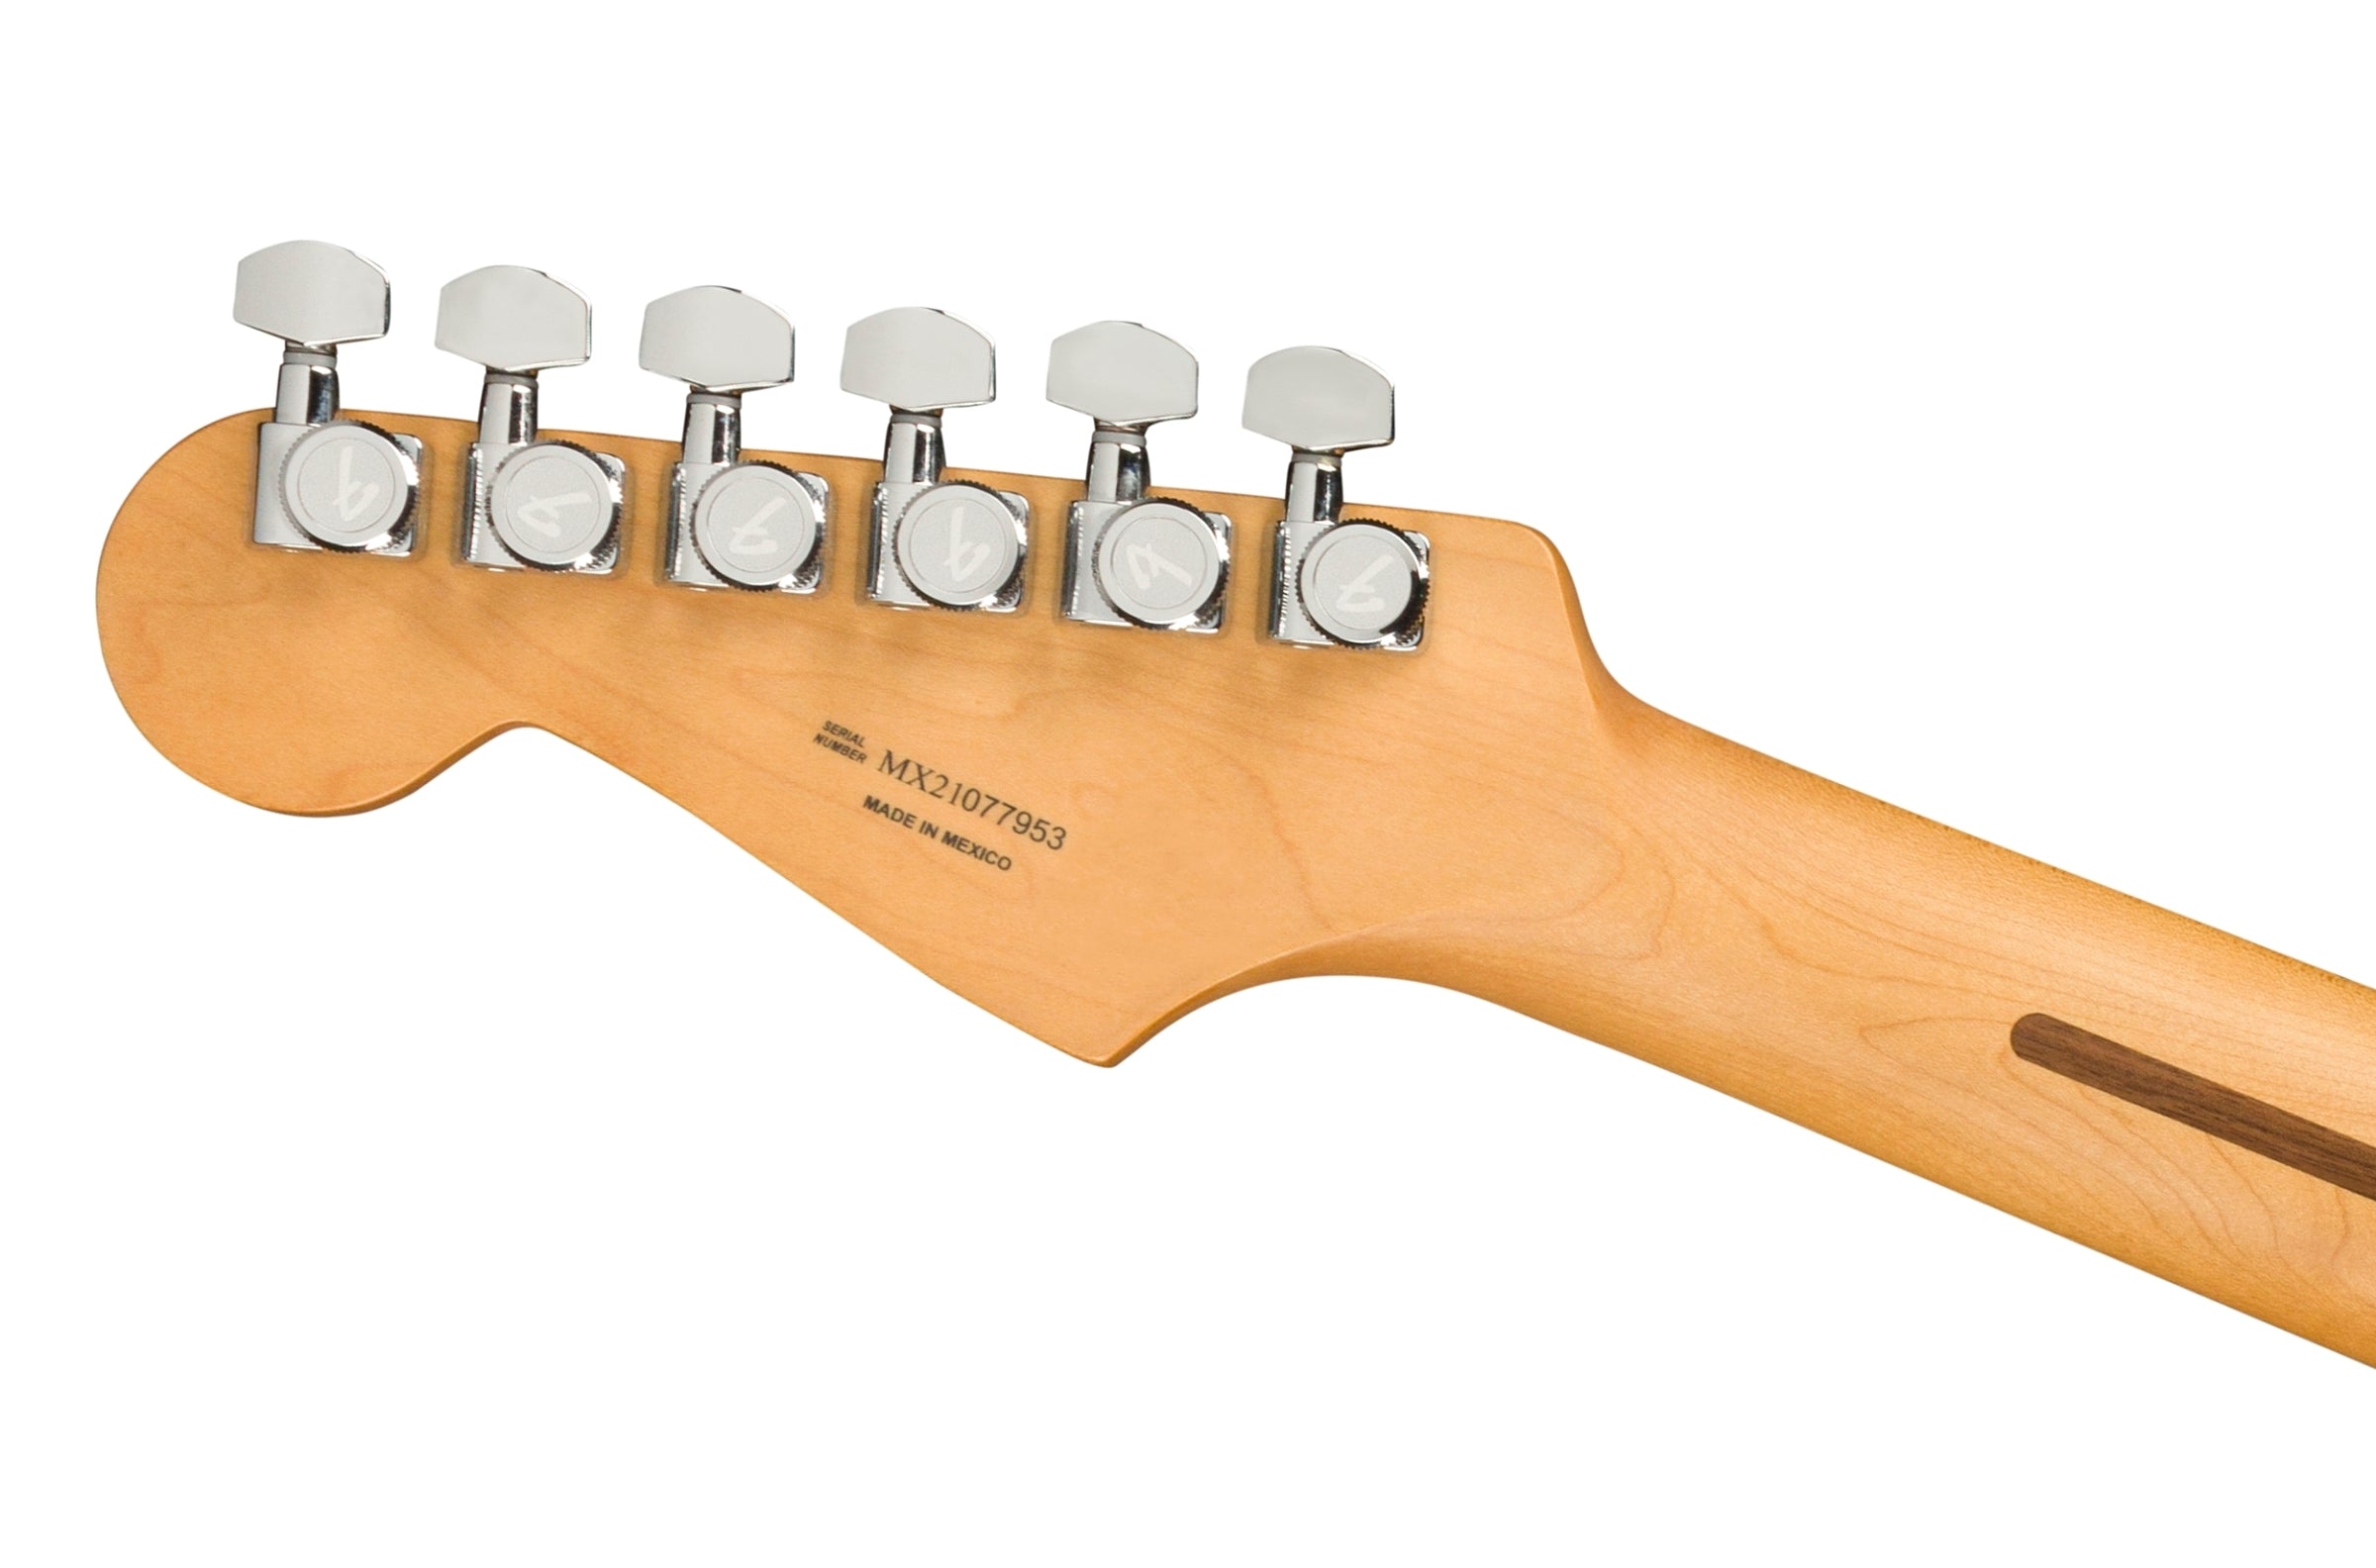 Fender Player Plus Stratocaster HSS Electric Guitar - Cosmic Jade